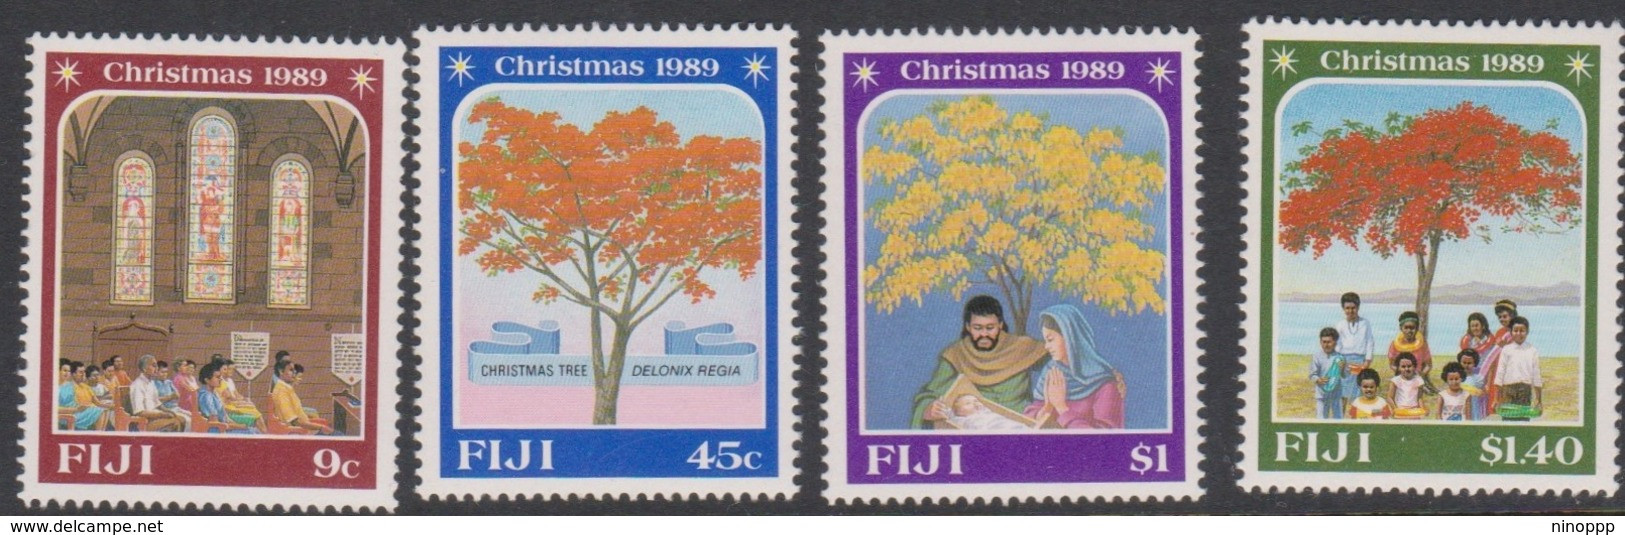 Fiji SG 802-805 1989 Christmas, Mint Never Hinged - Fiji (1970-...)